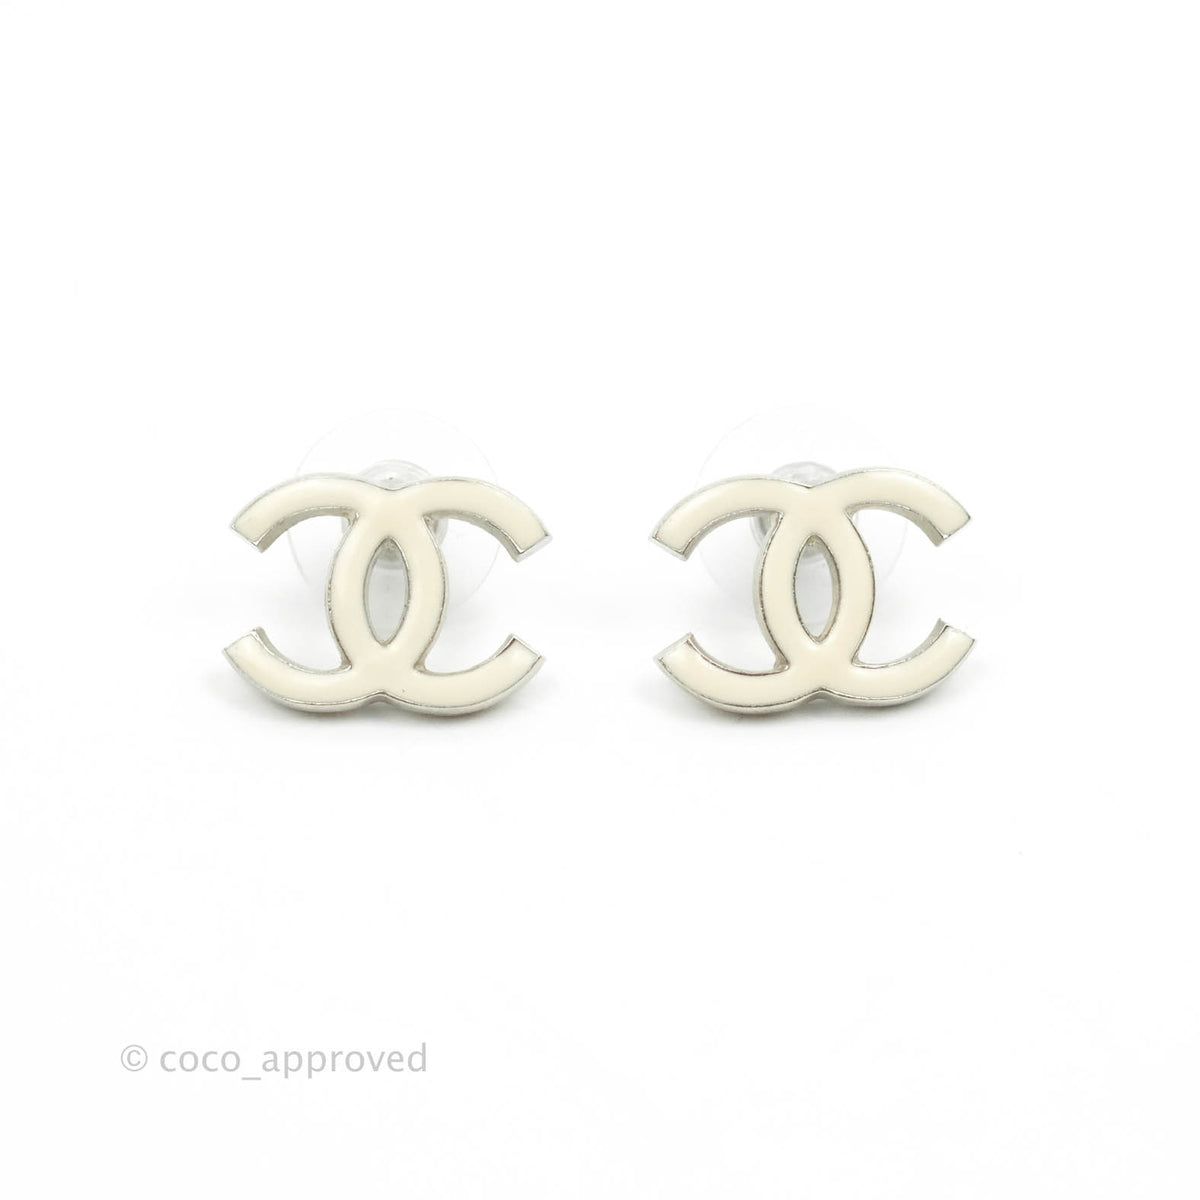 Exclusive Chanel CC dripping Earrings Custom Made / MADEJUST4U